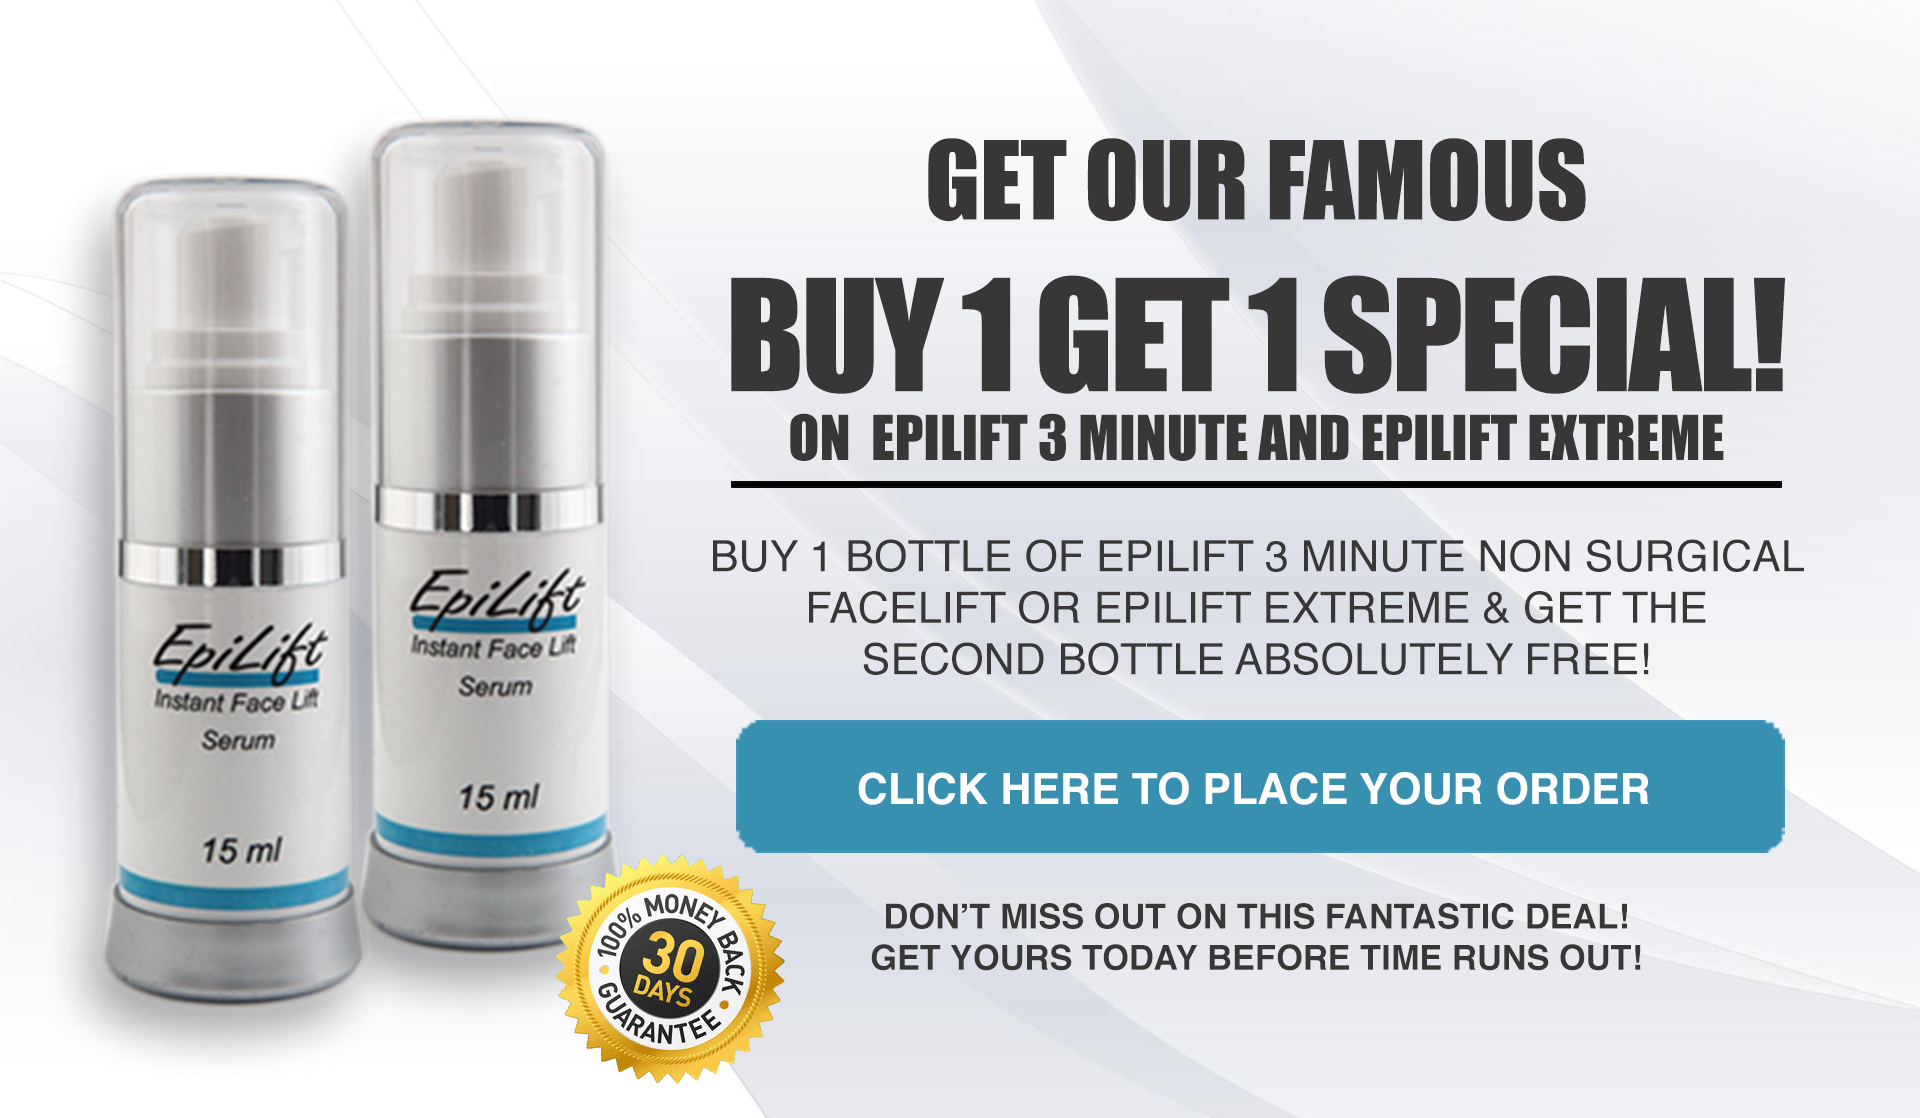 EpiLift Instant Face Lift serum